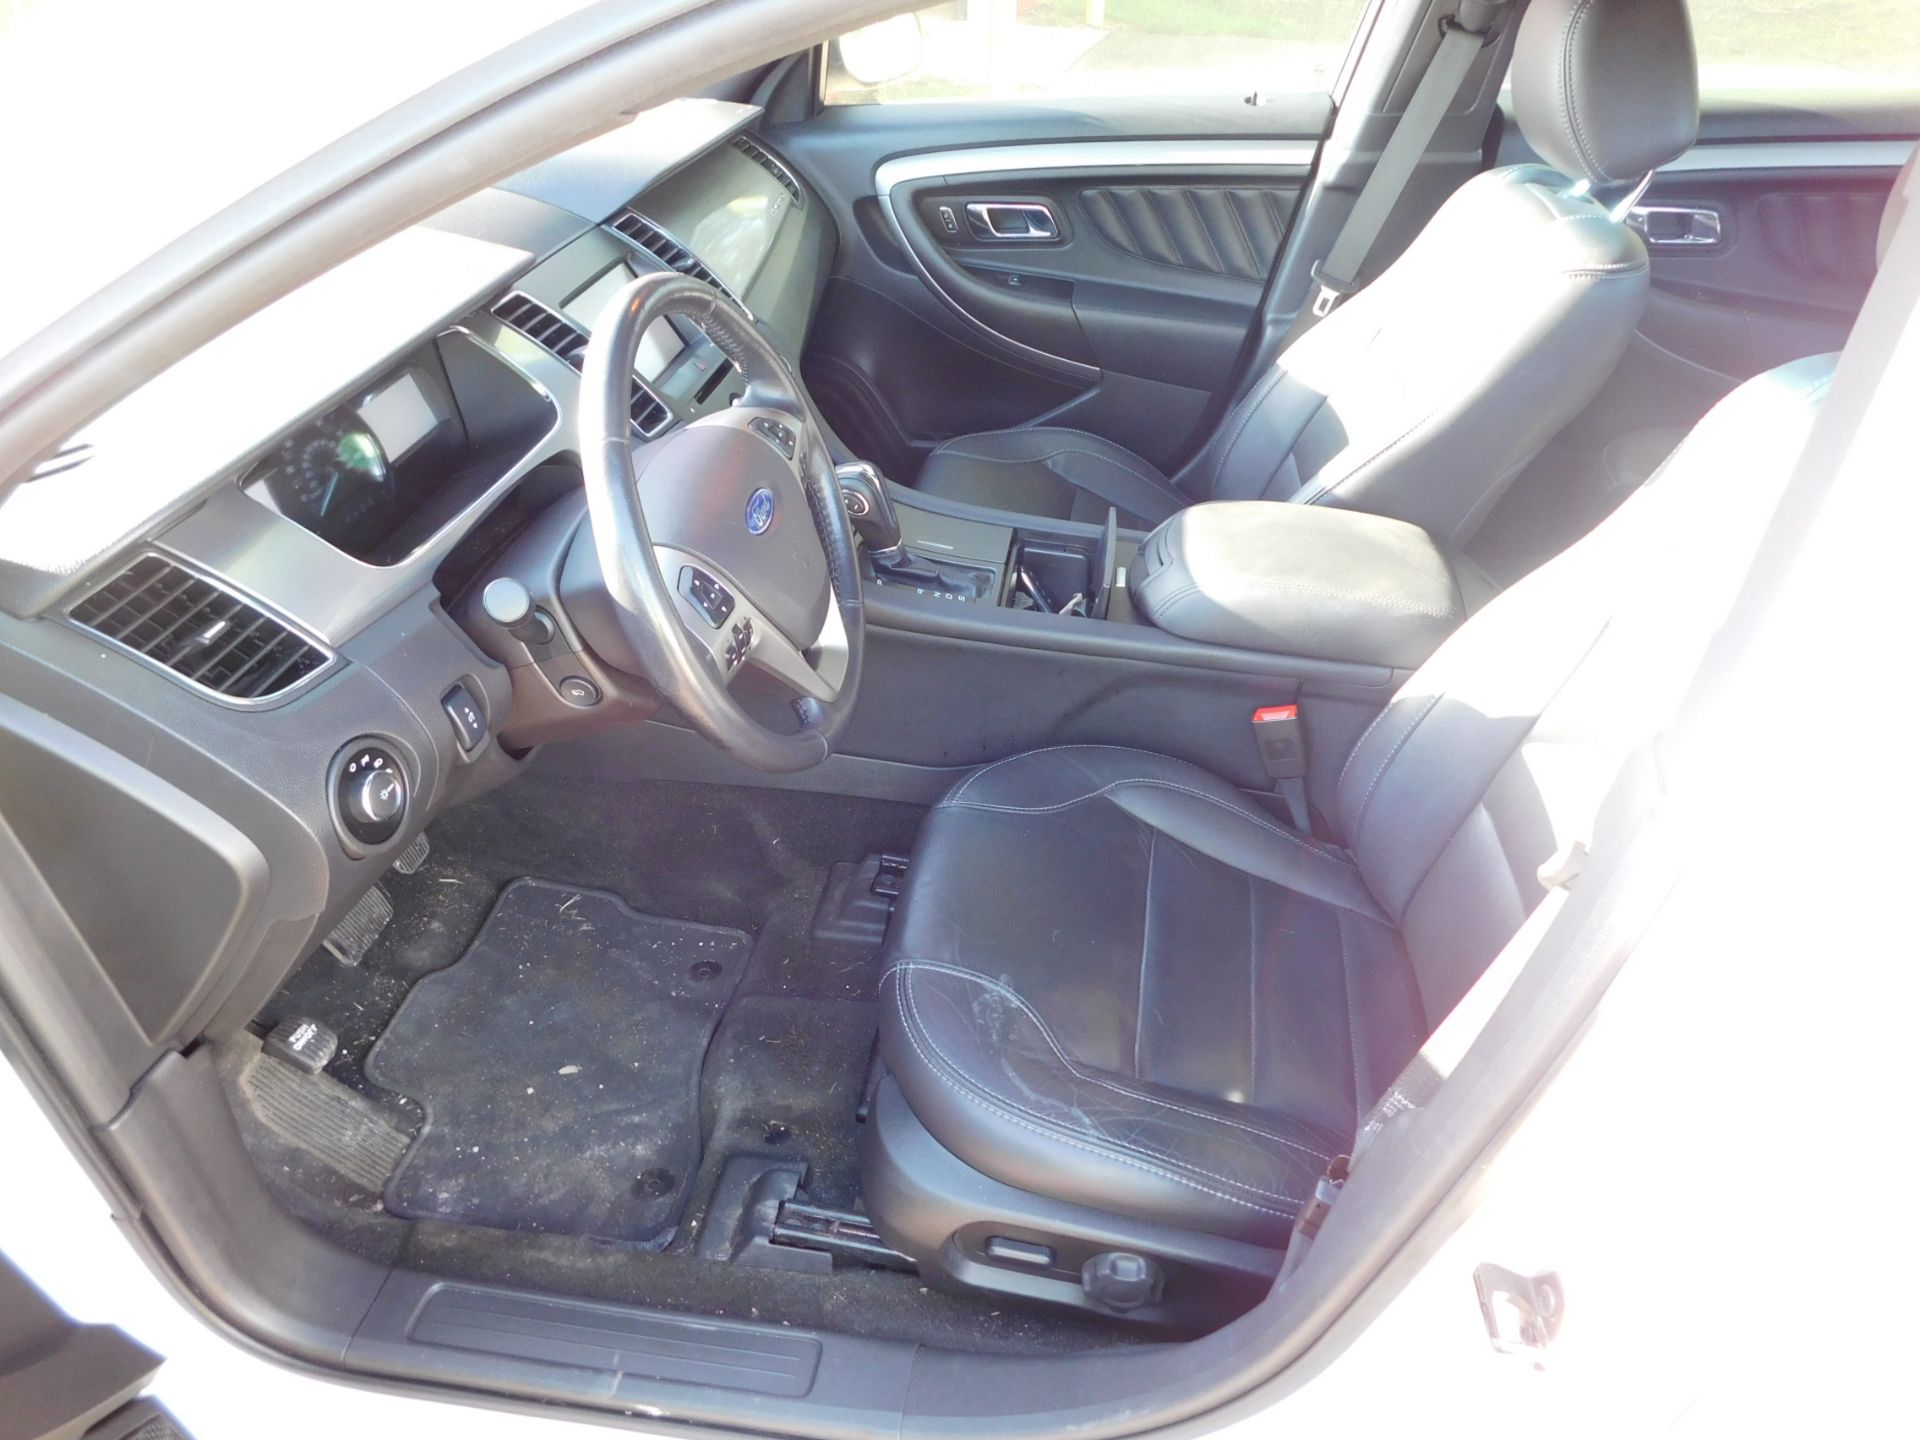 2015 Ford Taurus SEL 4-Door Sedan, vin 1FAHP2E80FG182717, Automatic Transmission, PW,PL,AC,Leather - Image 22 of 42